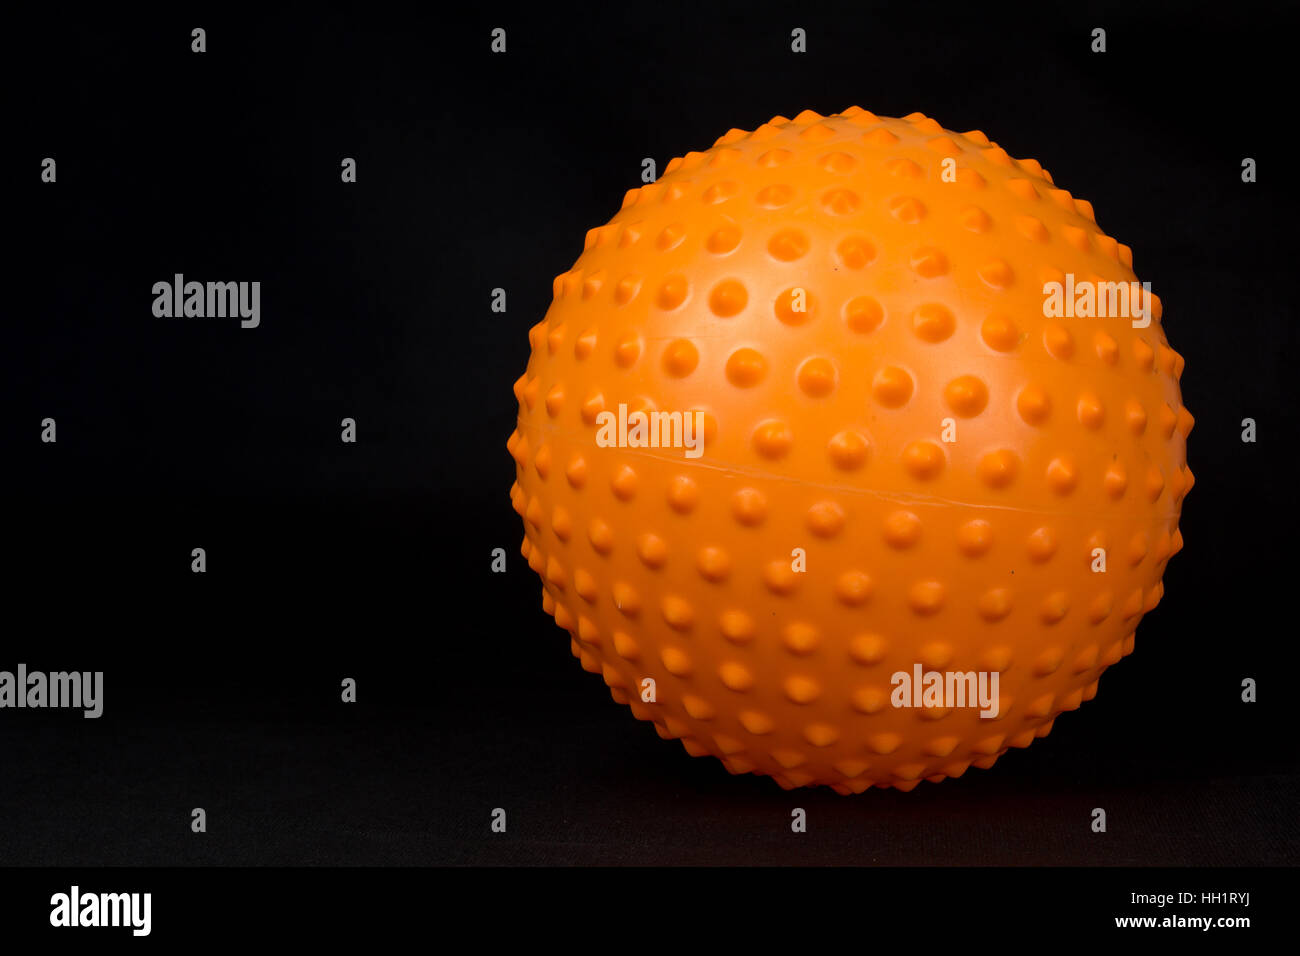 Orange spiky massage ball on black background Stock Photo